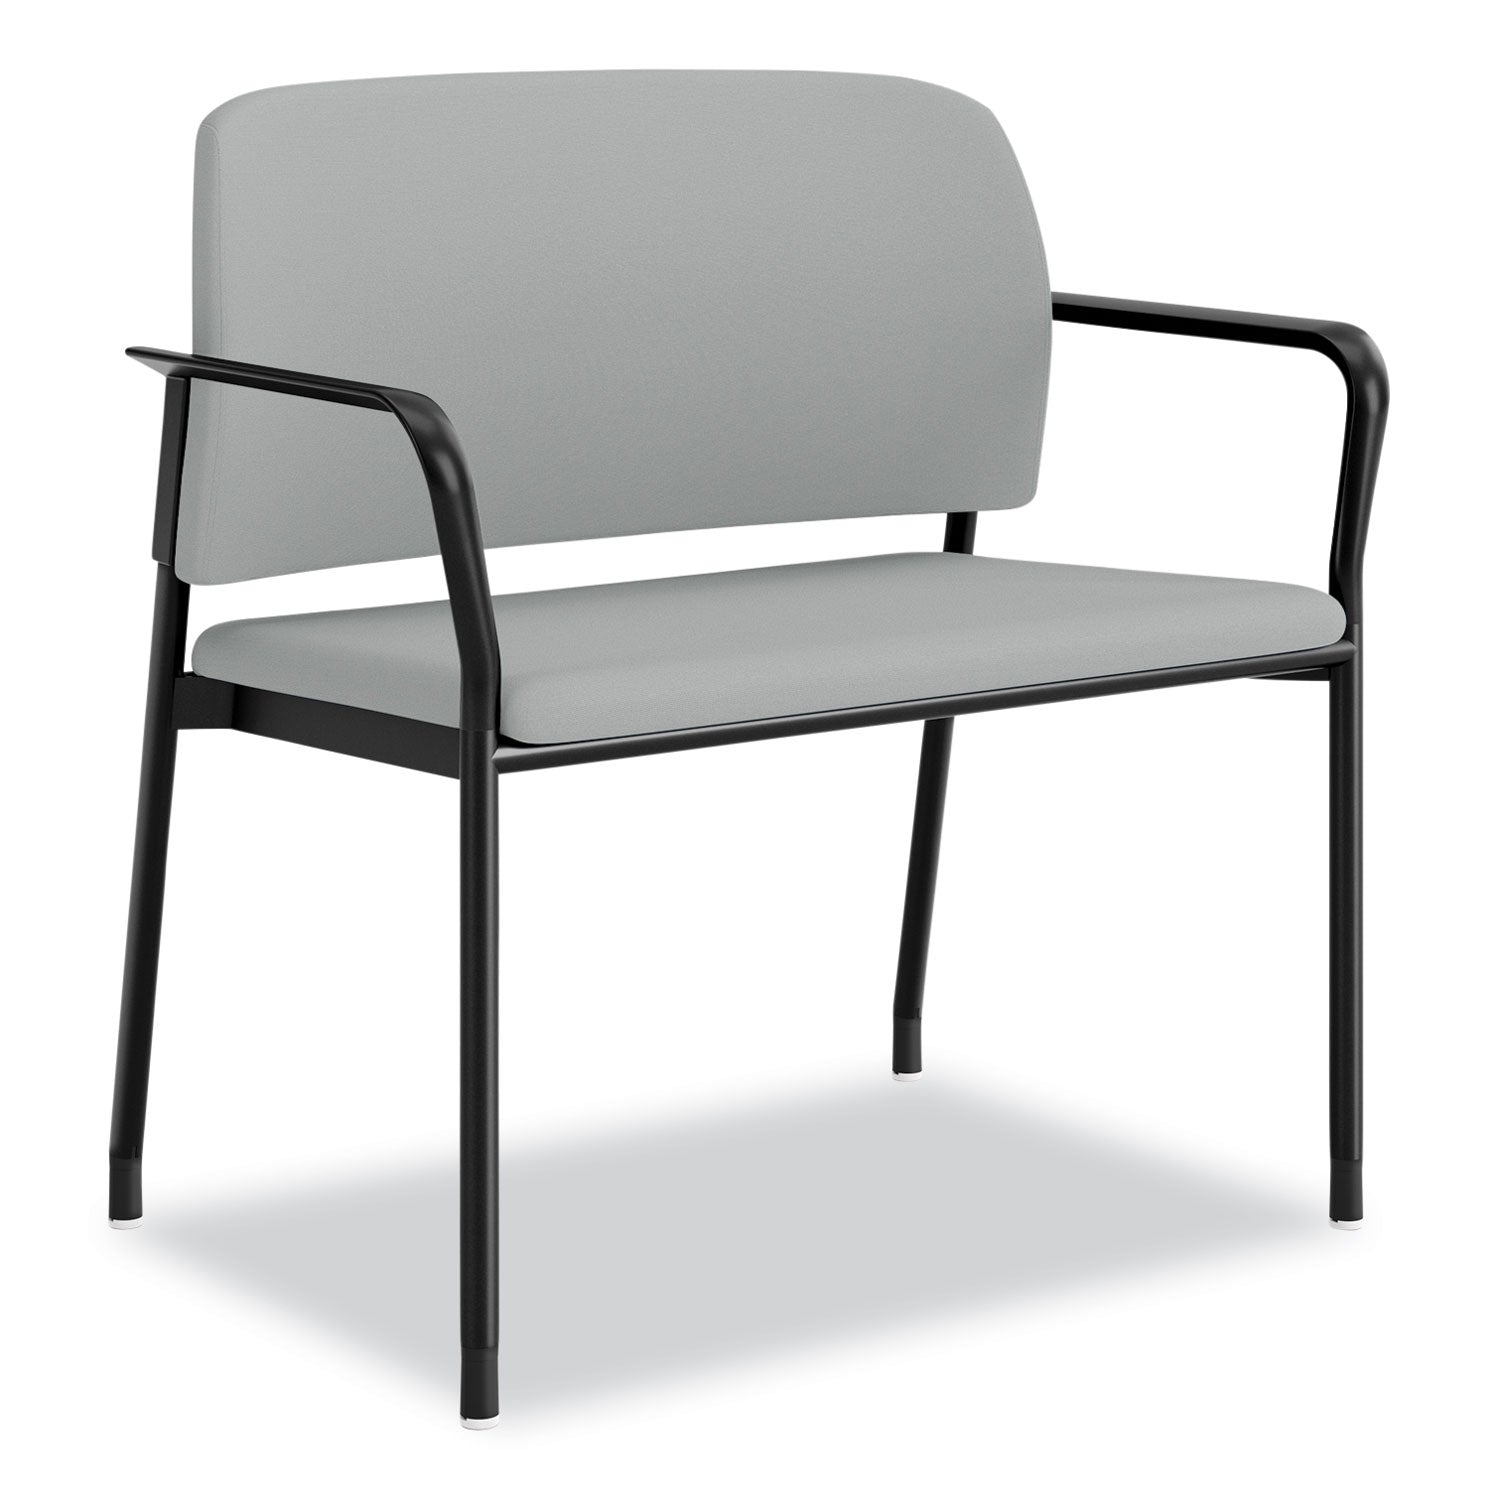 accommodate-series-bariatric-chair-with-arms-335-x-215-x-325-flint-seat-flint-back-charblack-legs_honsb50fesx39cb - 1